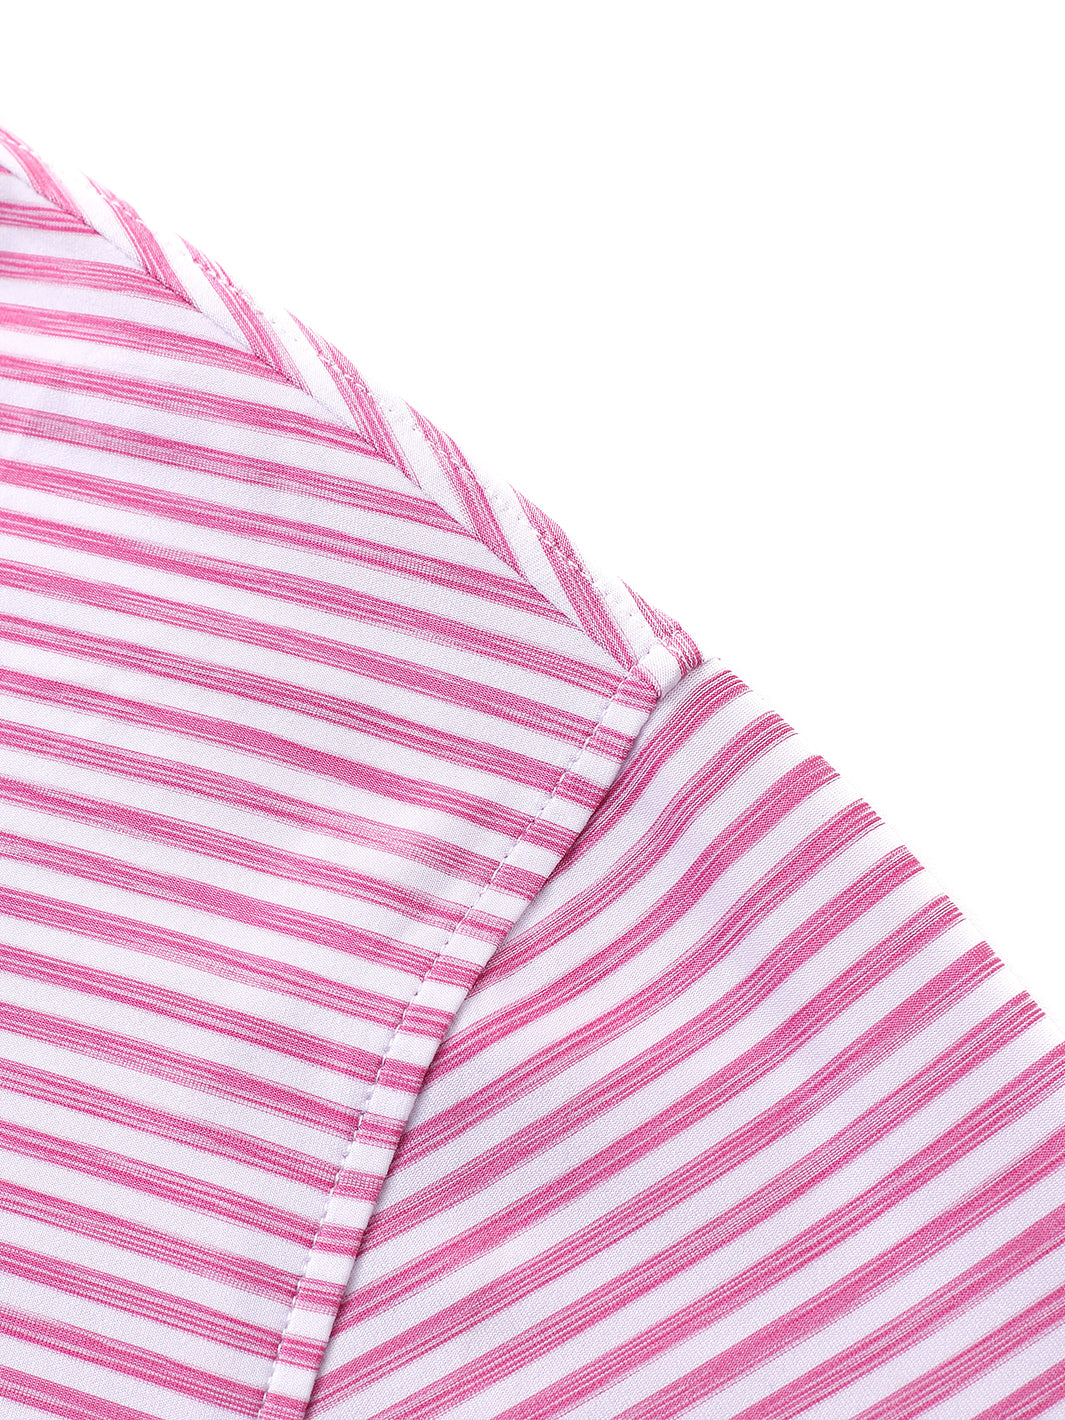 Men's Striped Golf Polo Shirts-Rose White